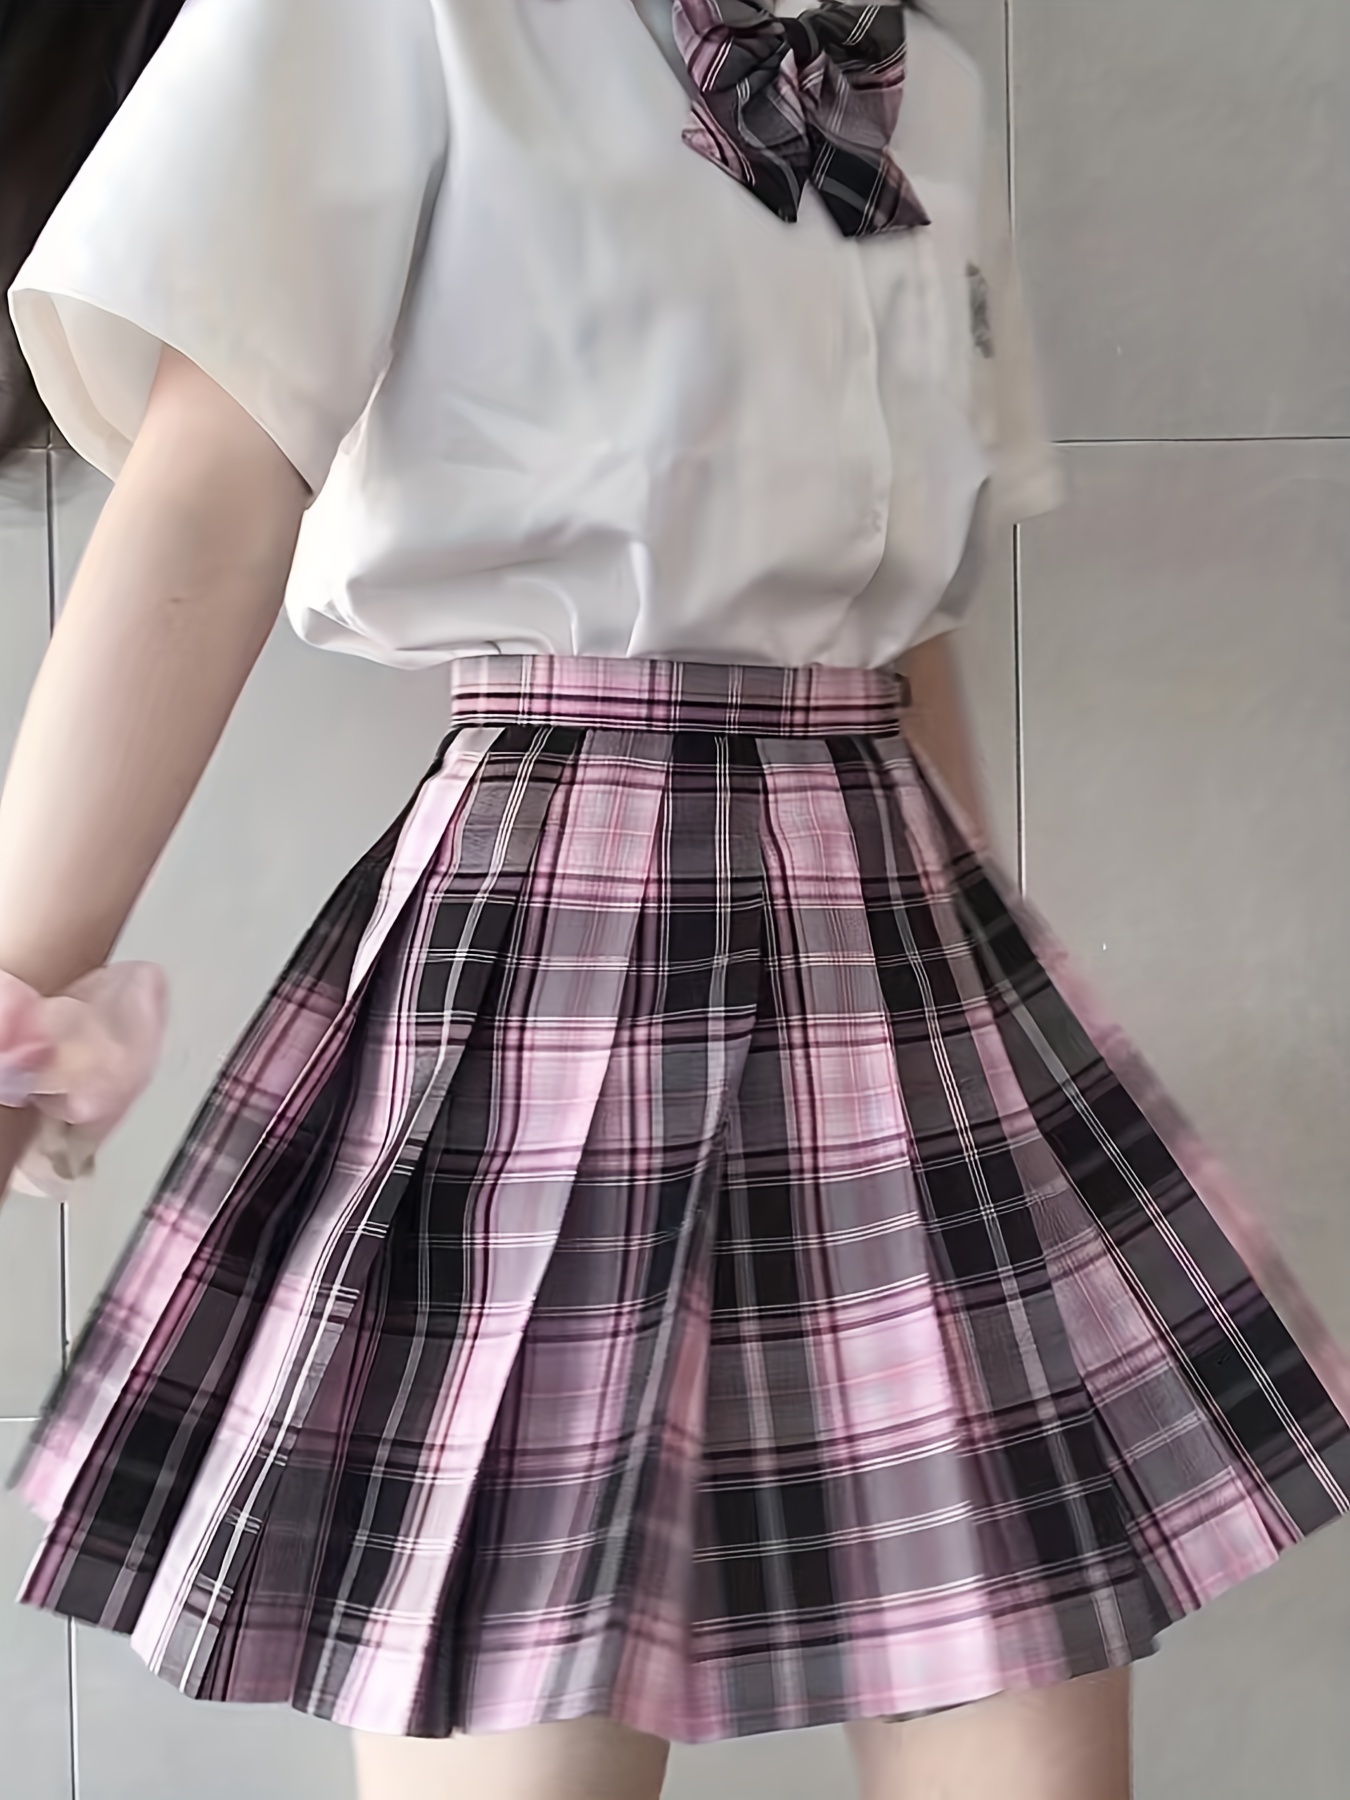 Saia plissada xadrez Kpop, saias de uniforme escolar japonês